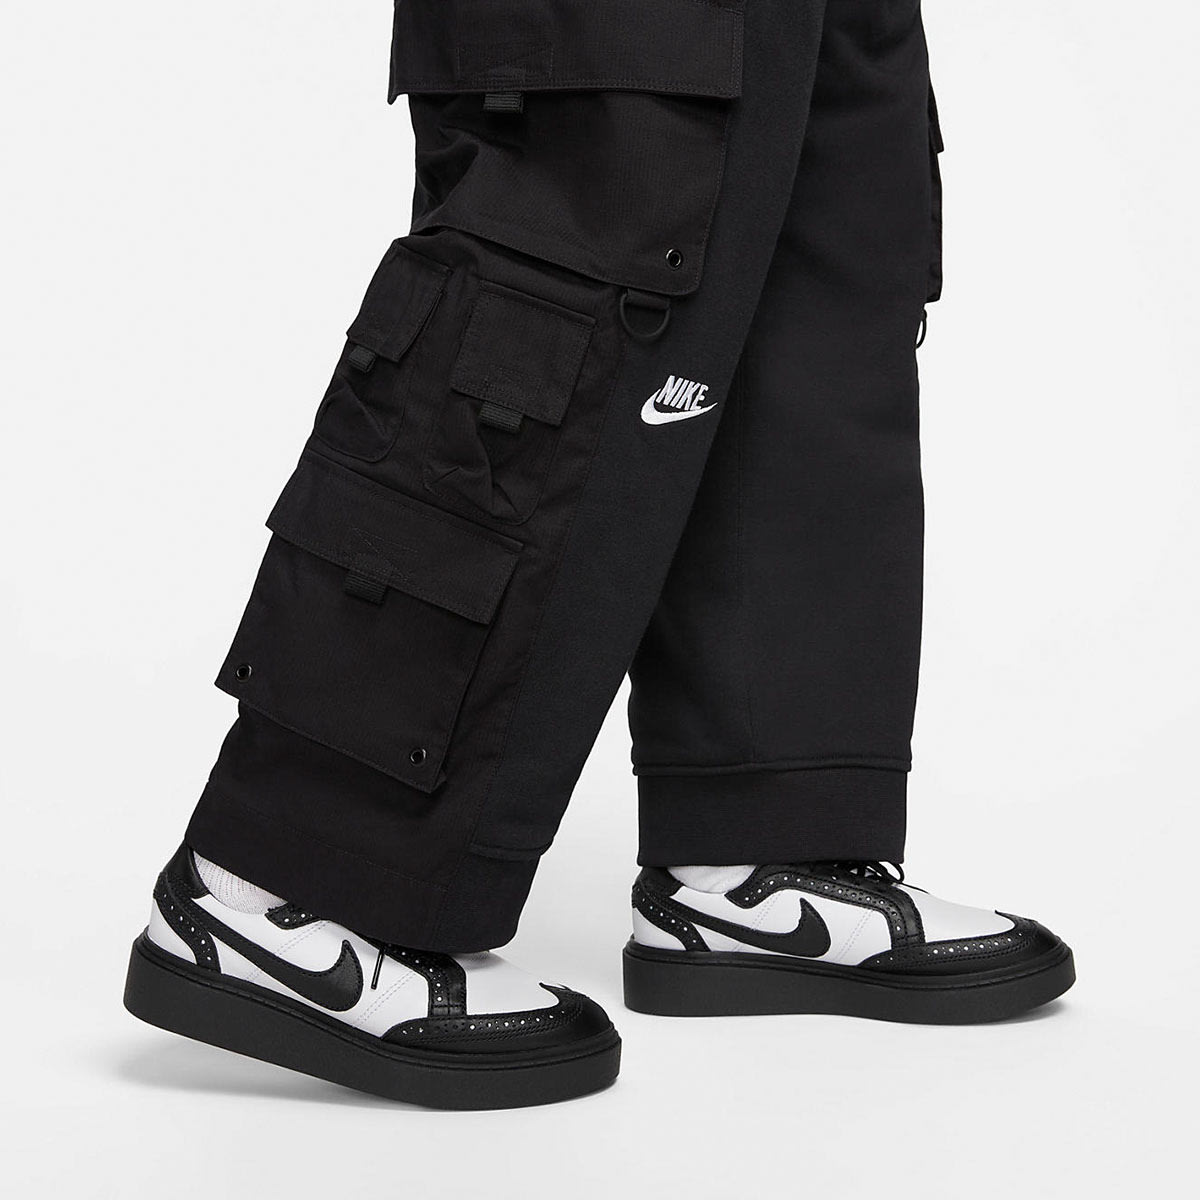 Nike x G Dragon Cf Wide Pant (Black & White) | END. Launches